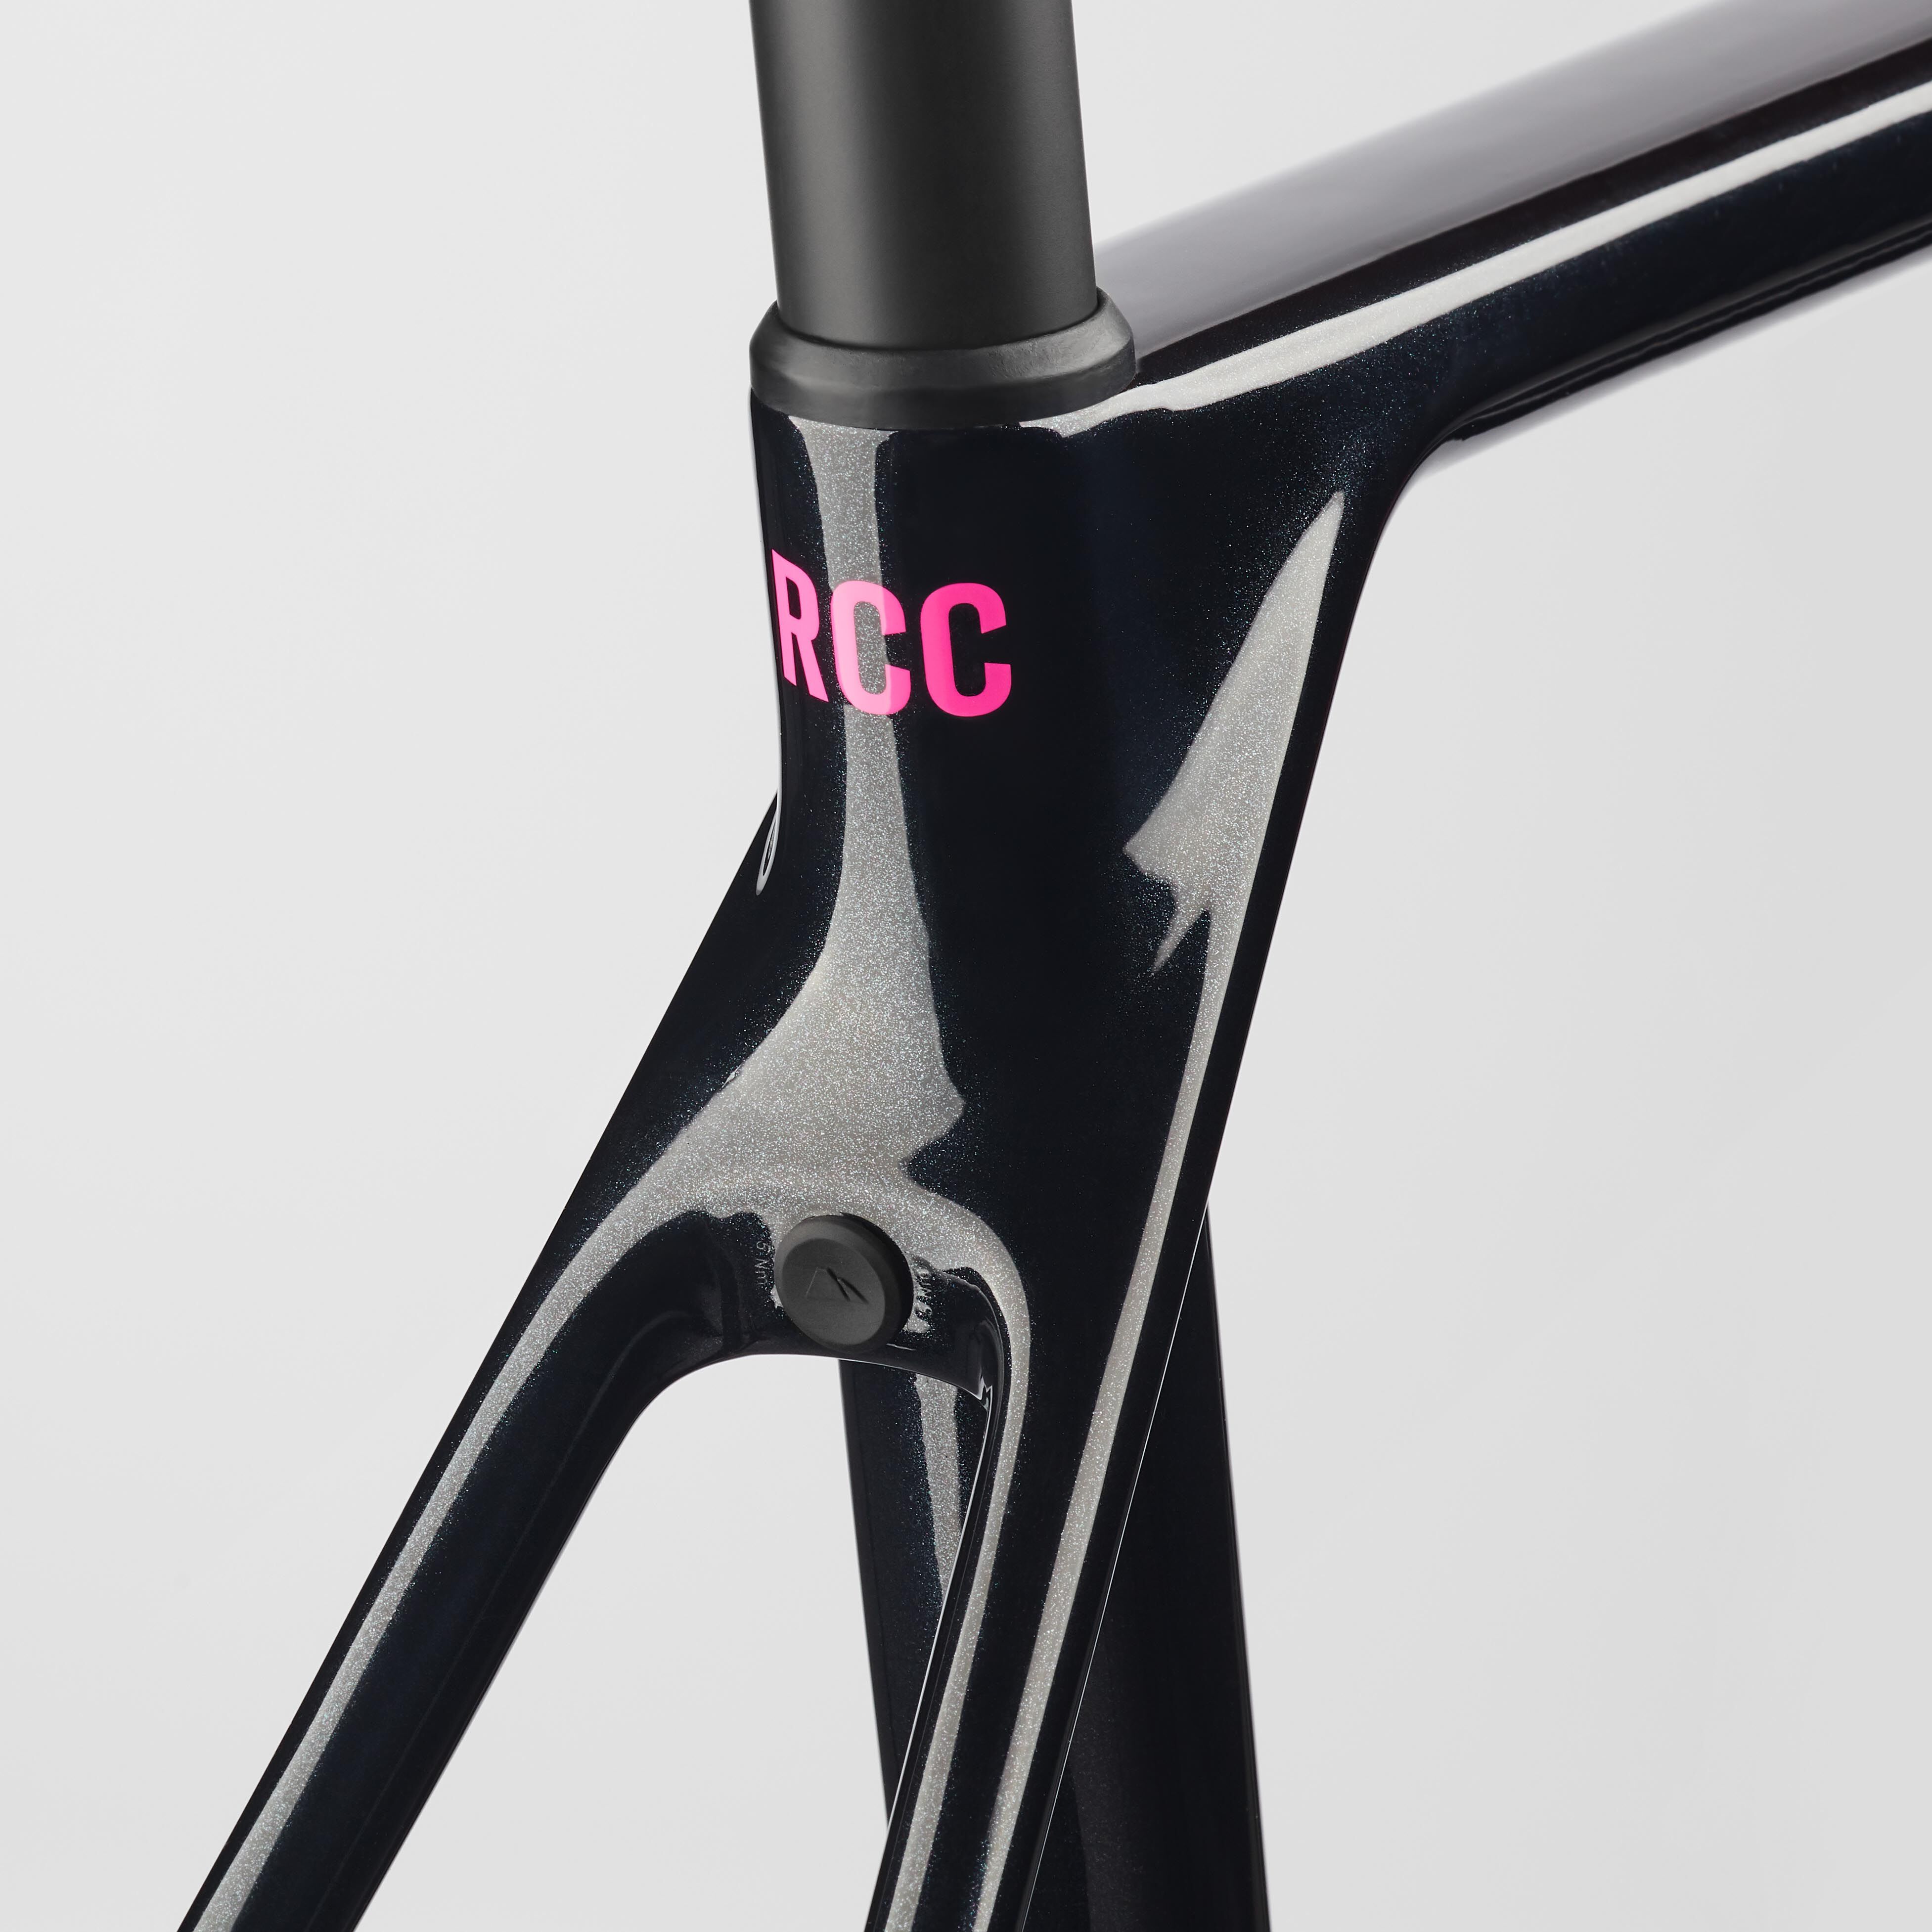 rcc bike